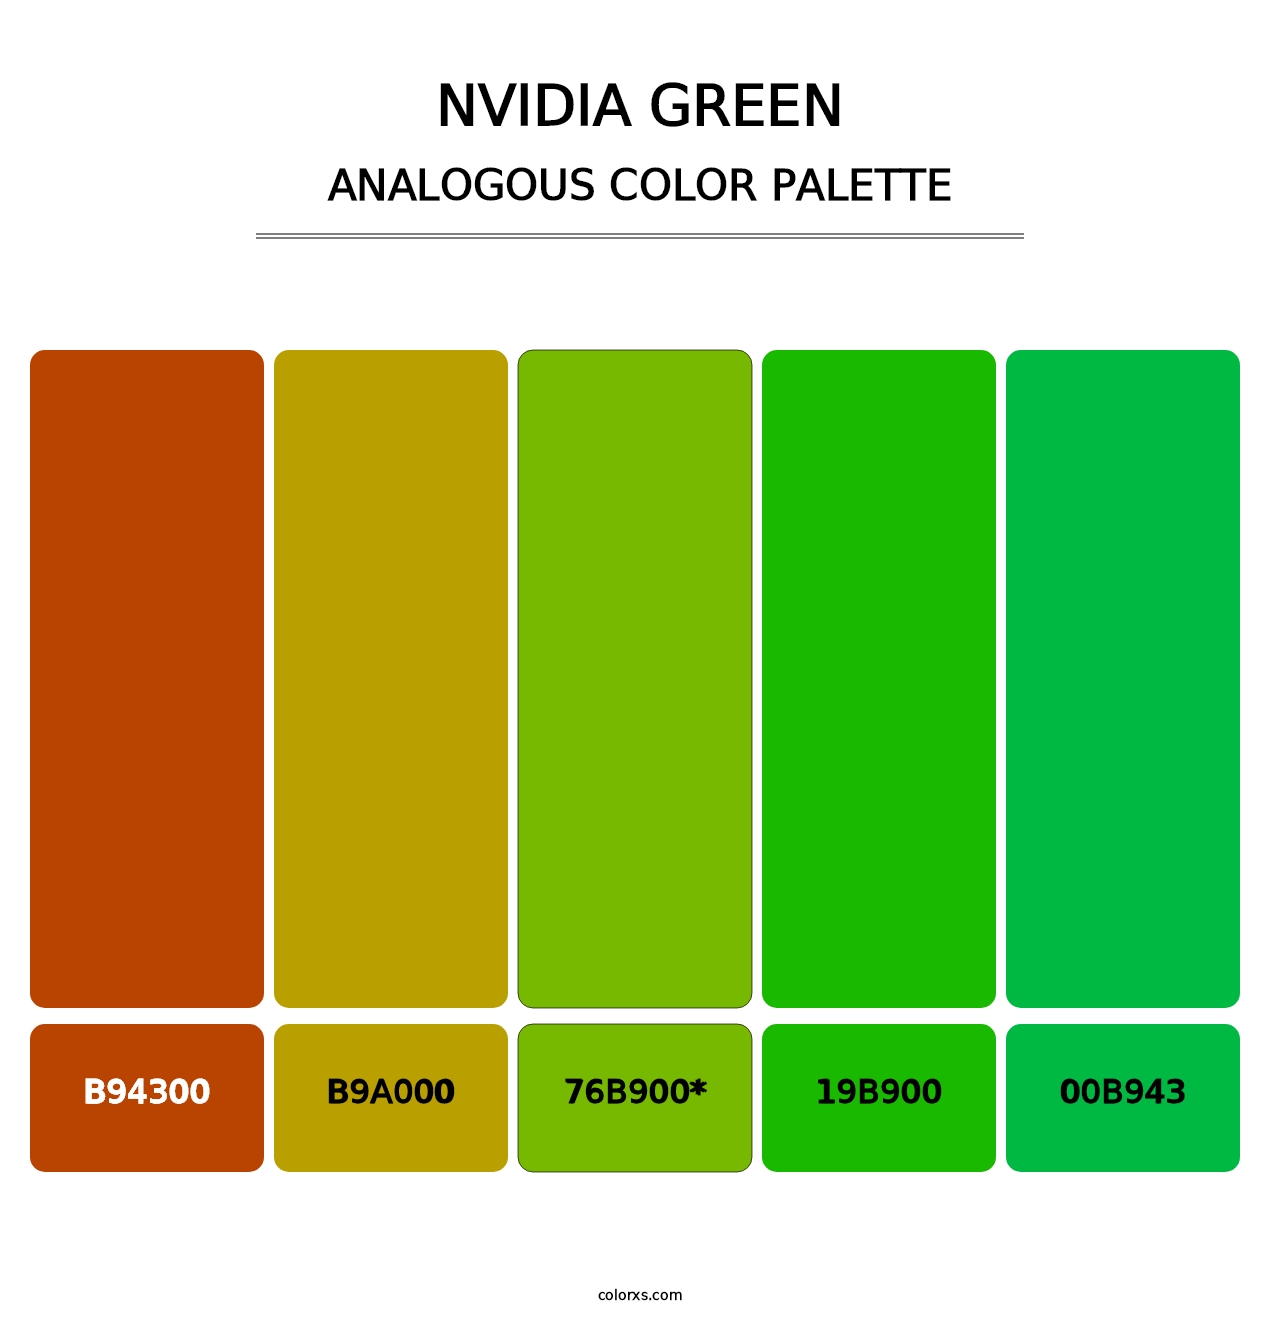 Nvidia Green - Analogous Color Palette